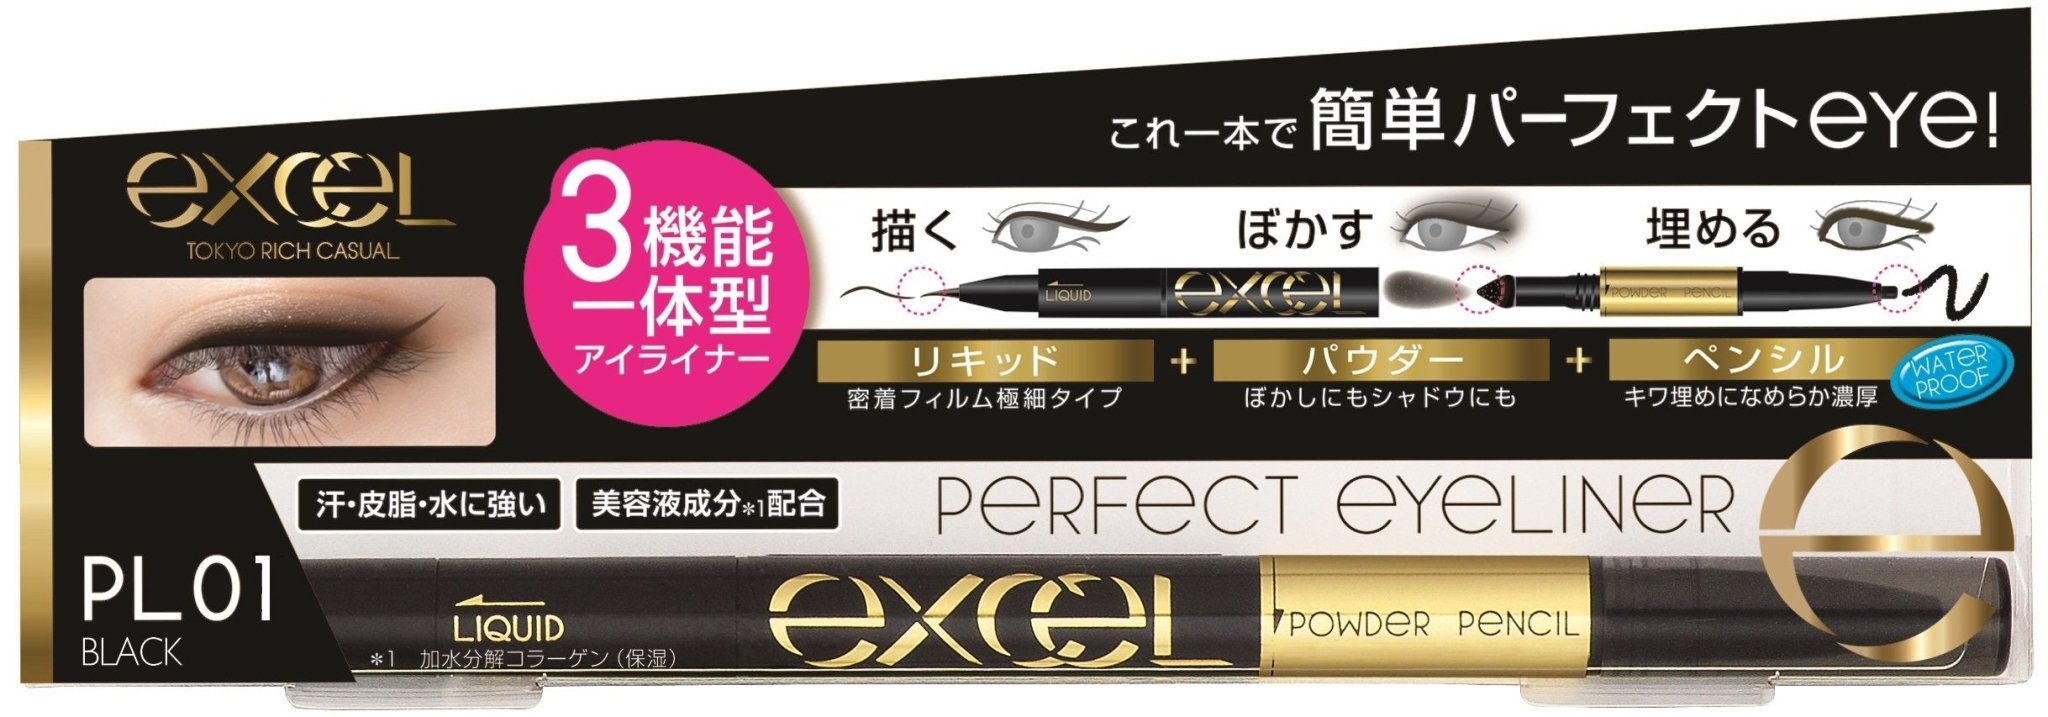 Excel Perfect Npl01 Black Eyeliner - Long - lasting Smudge - proof Eye Makeup